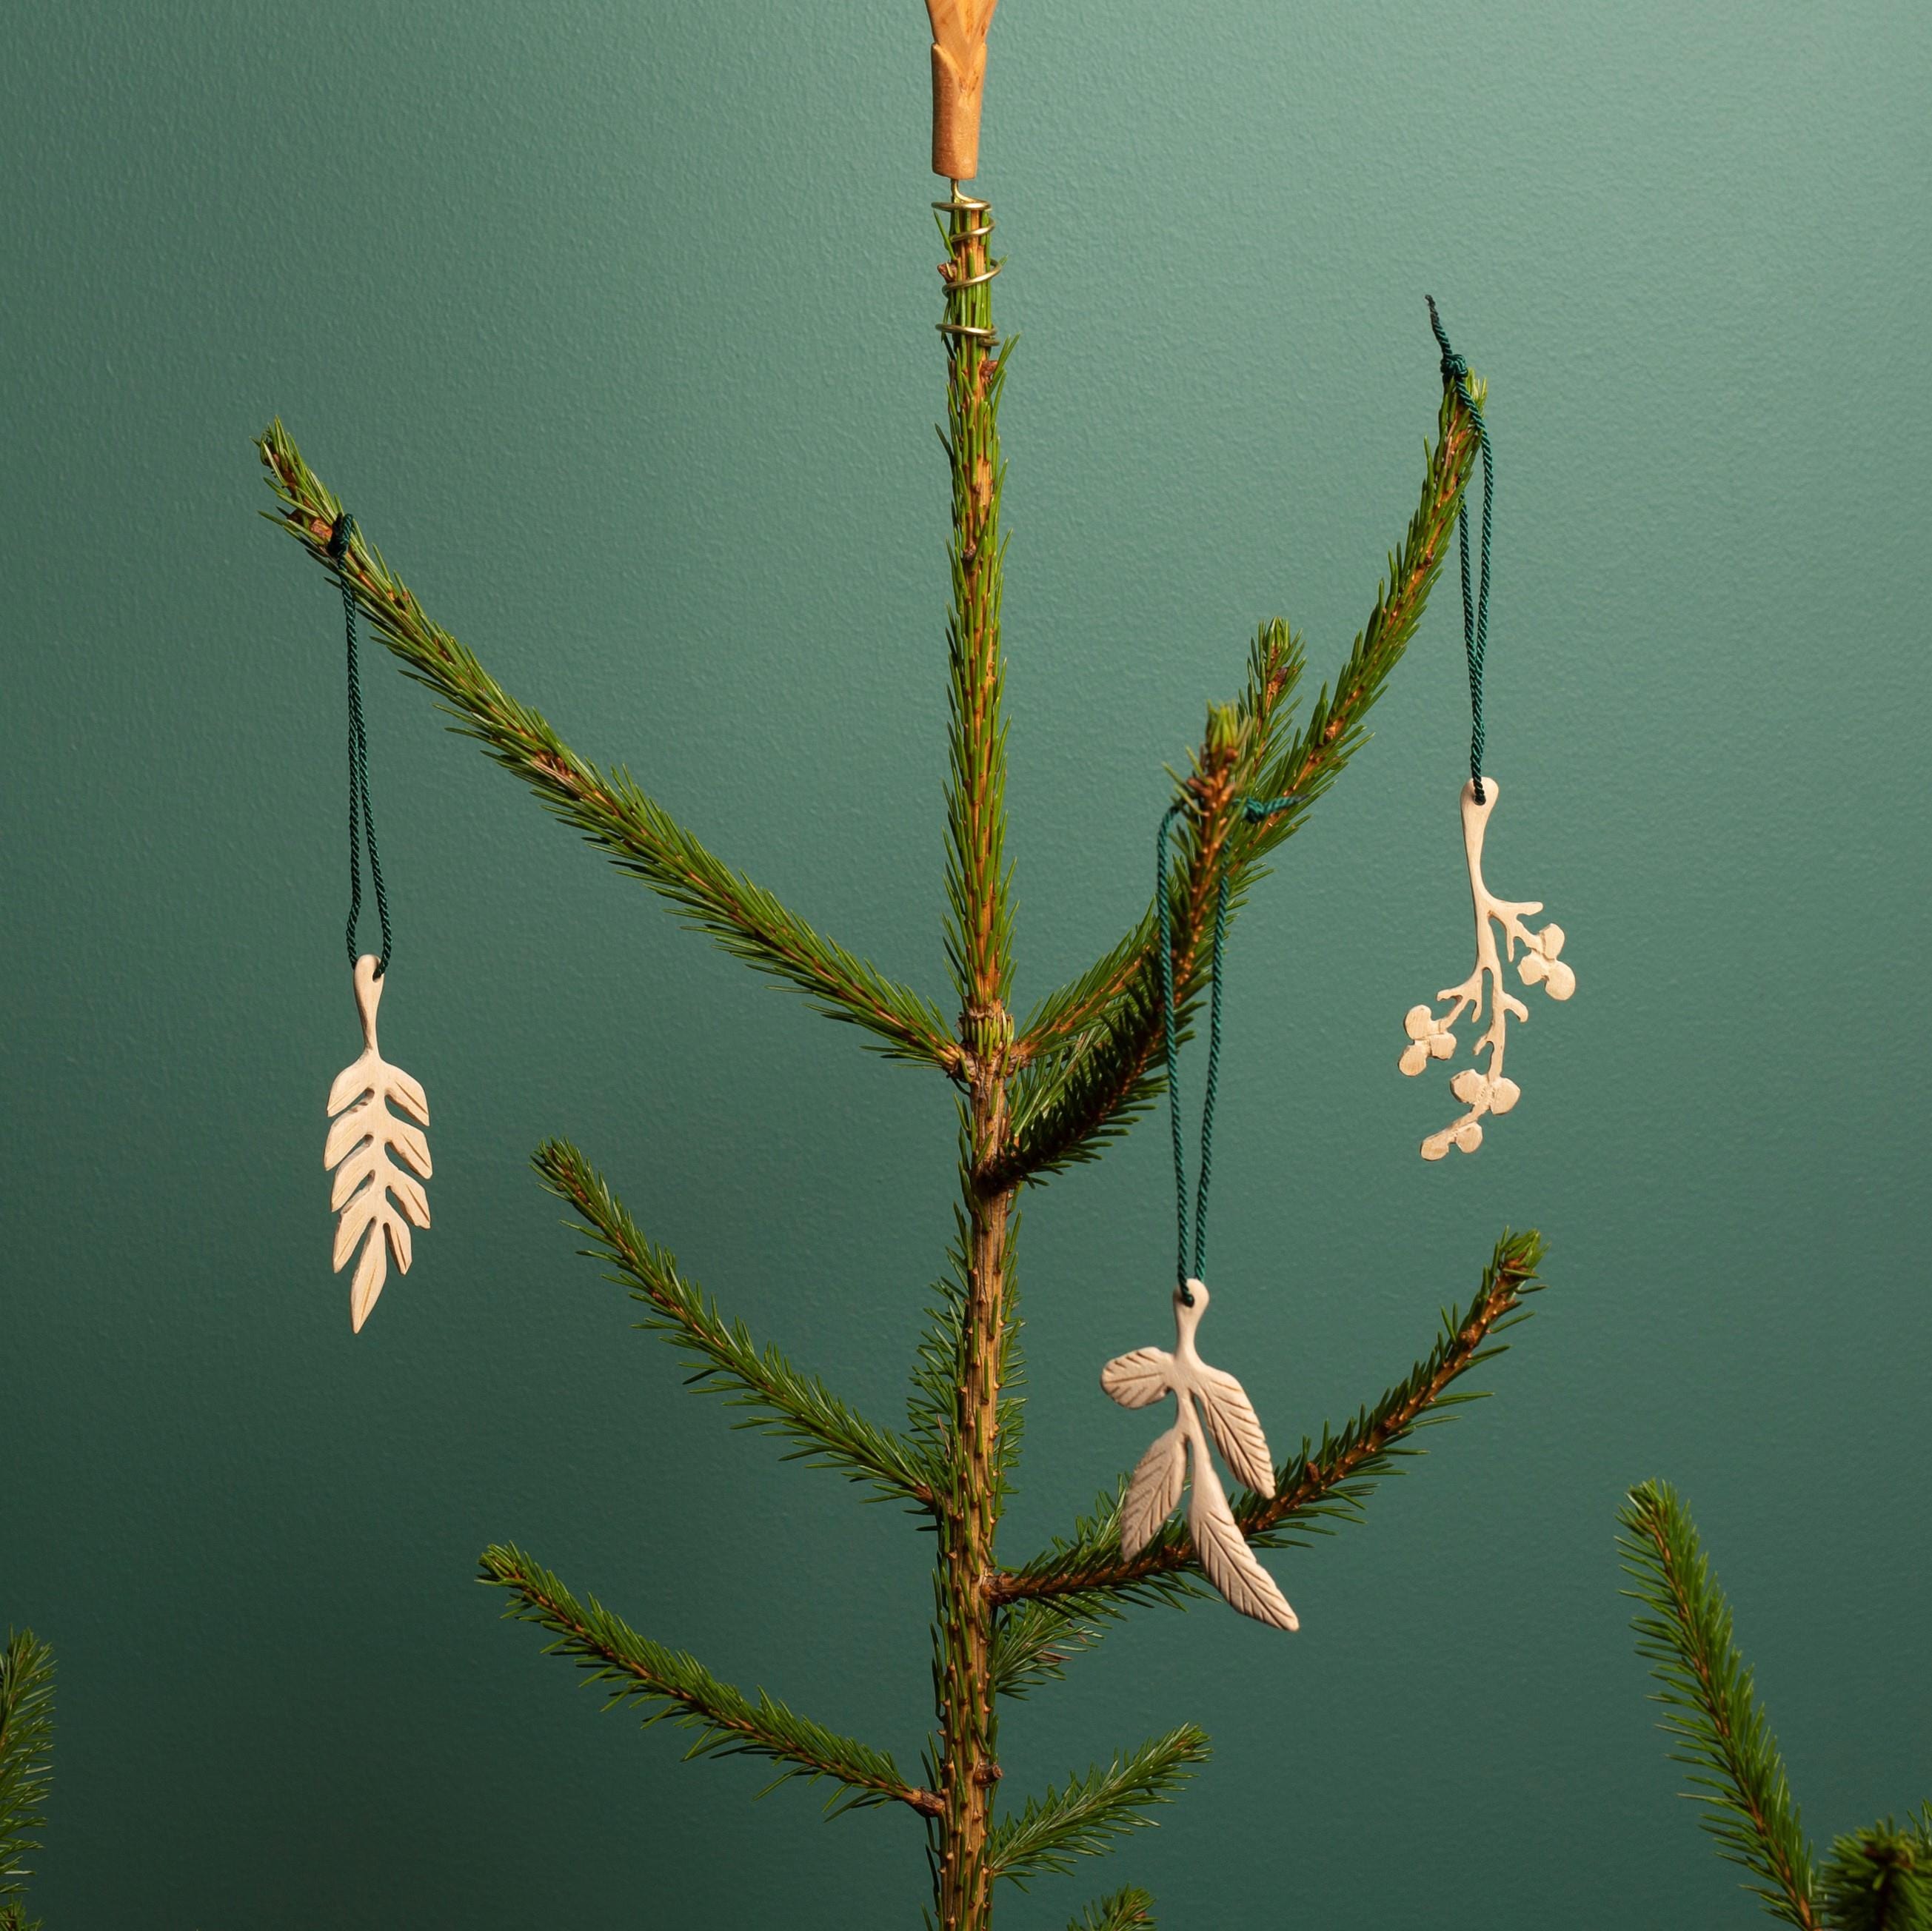 Mifuko Jacaranda wood Ornament One size Wooden ornament | 3 branches ornament set